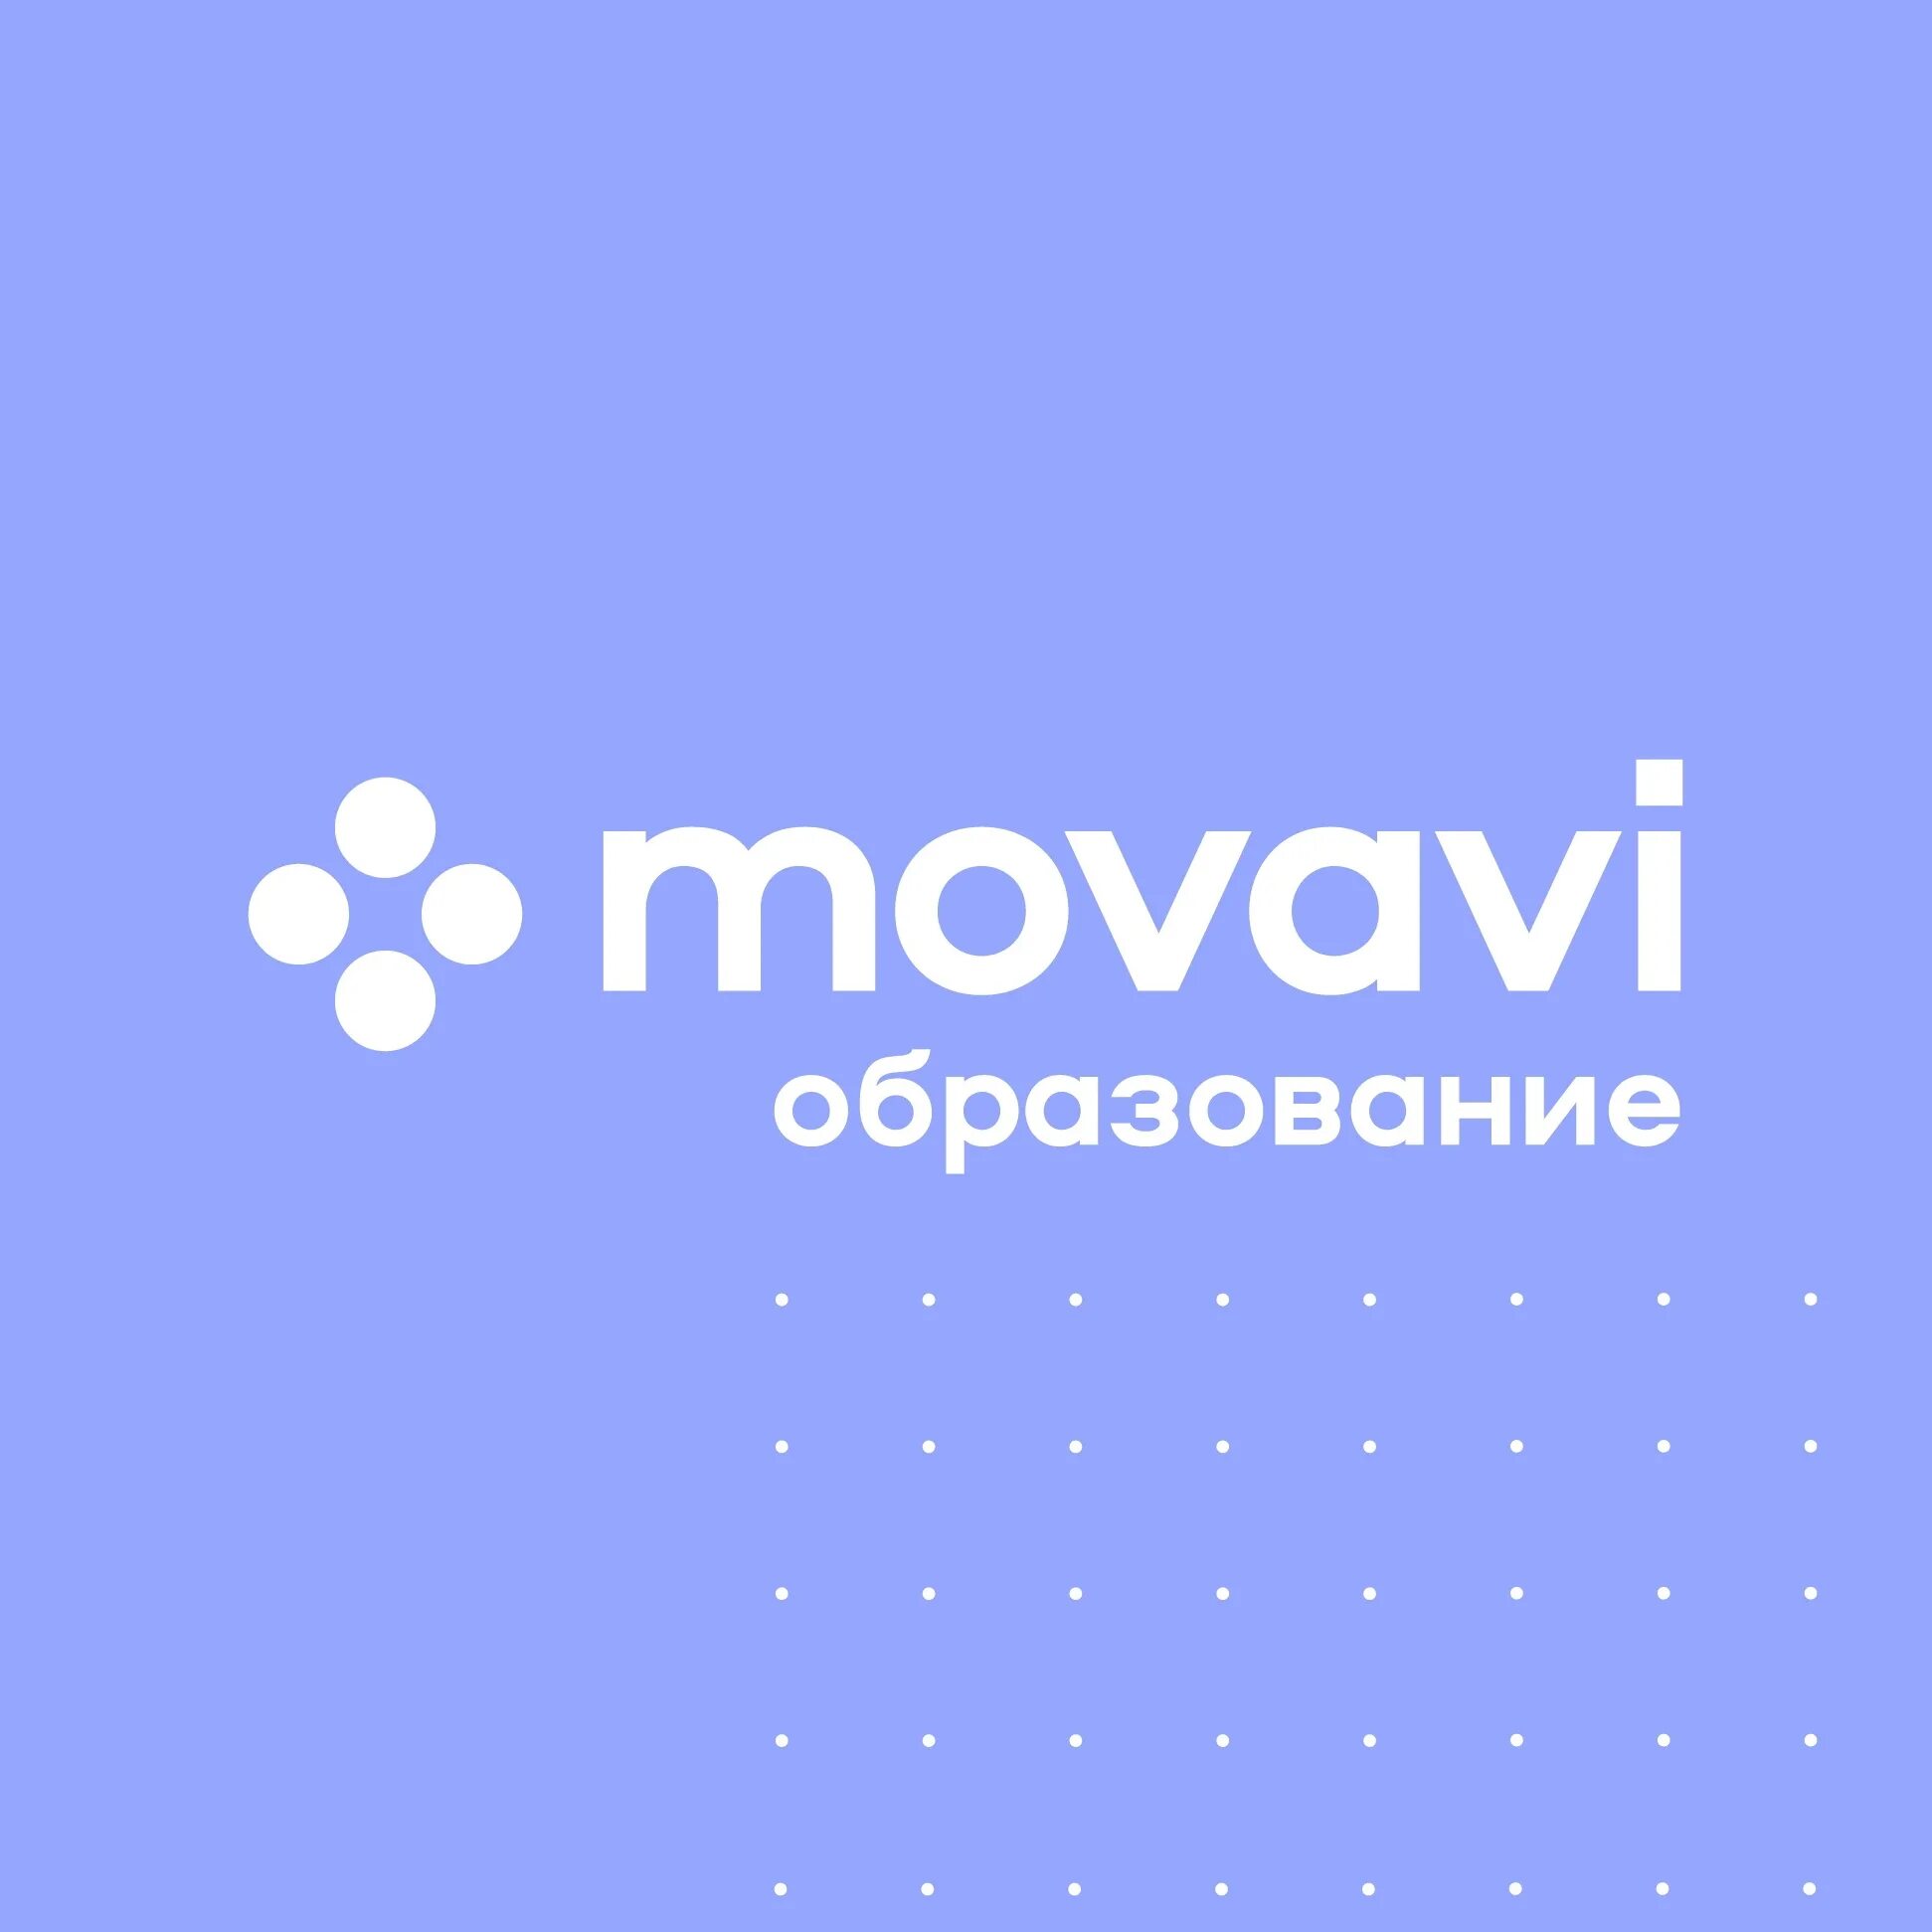 Сайт мовави. Movavi. Movavi лого. Vovanvi. Школа Movavi.